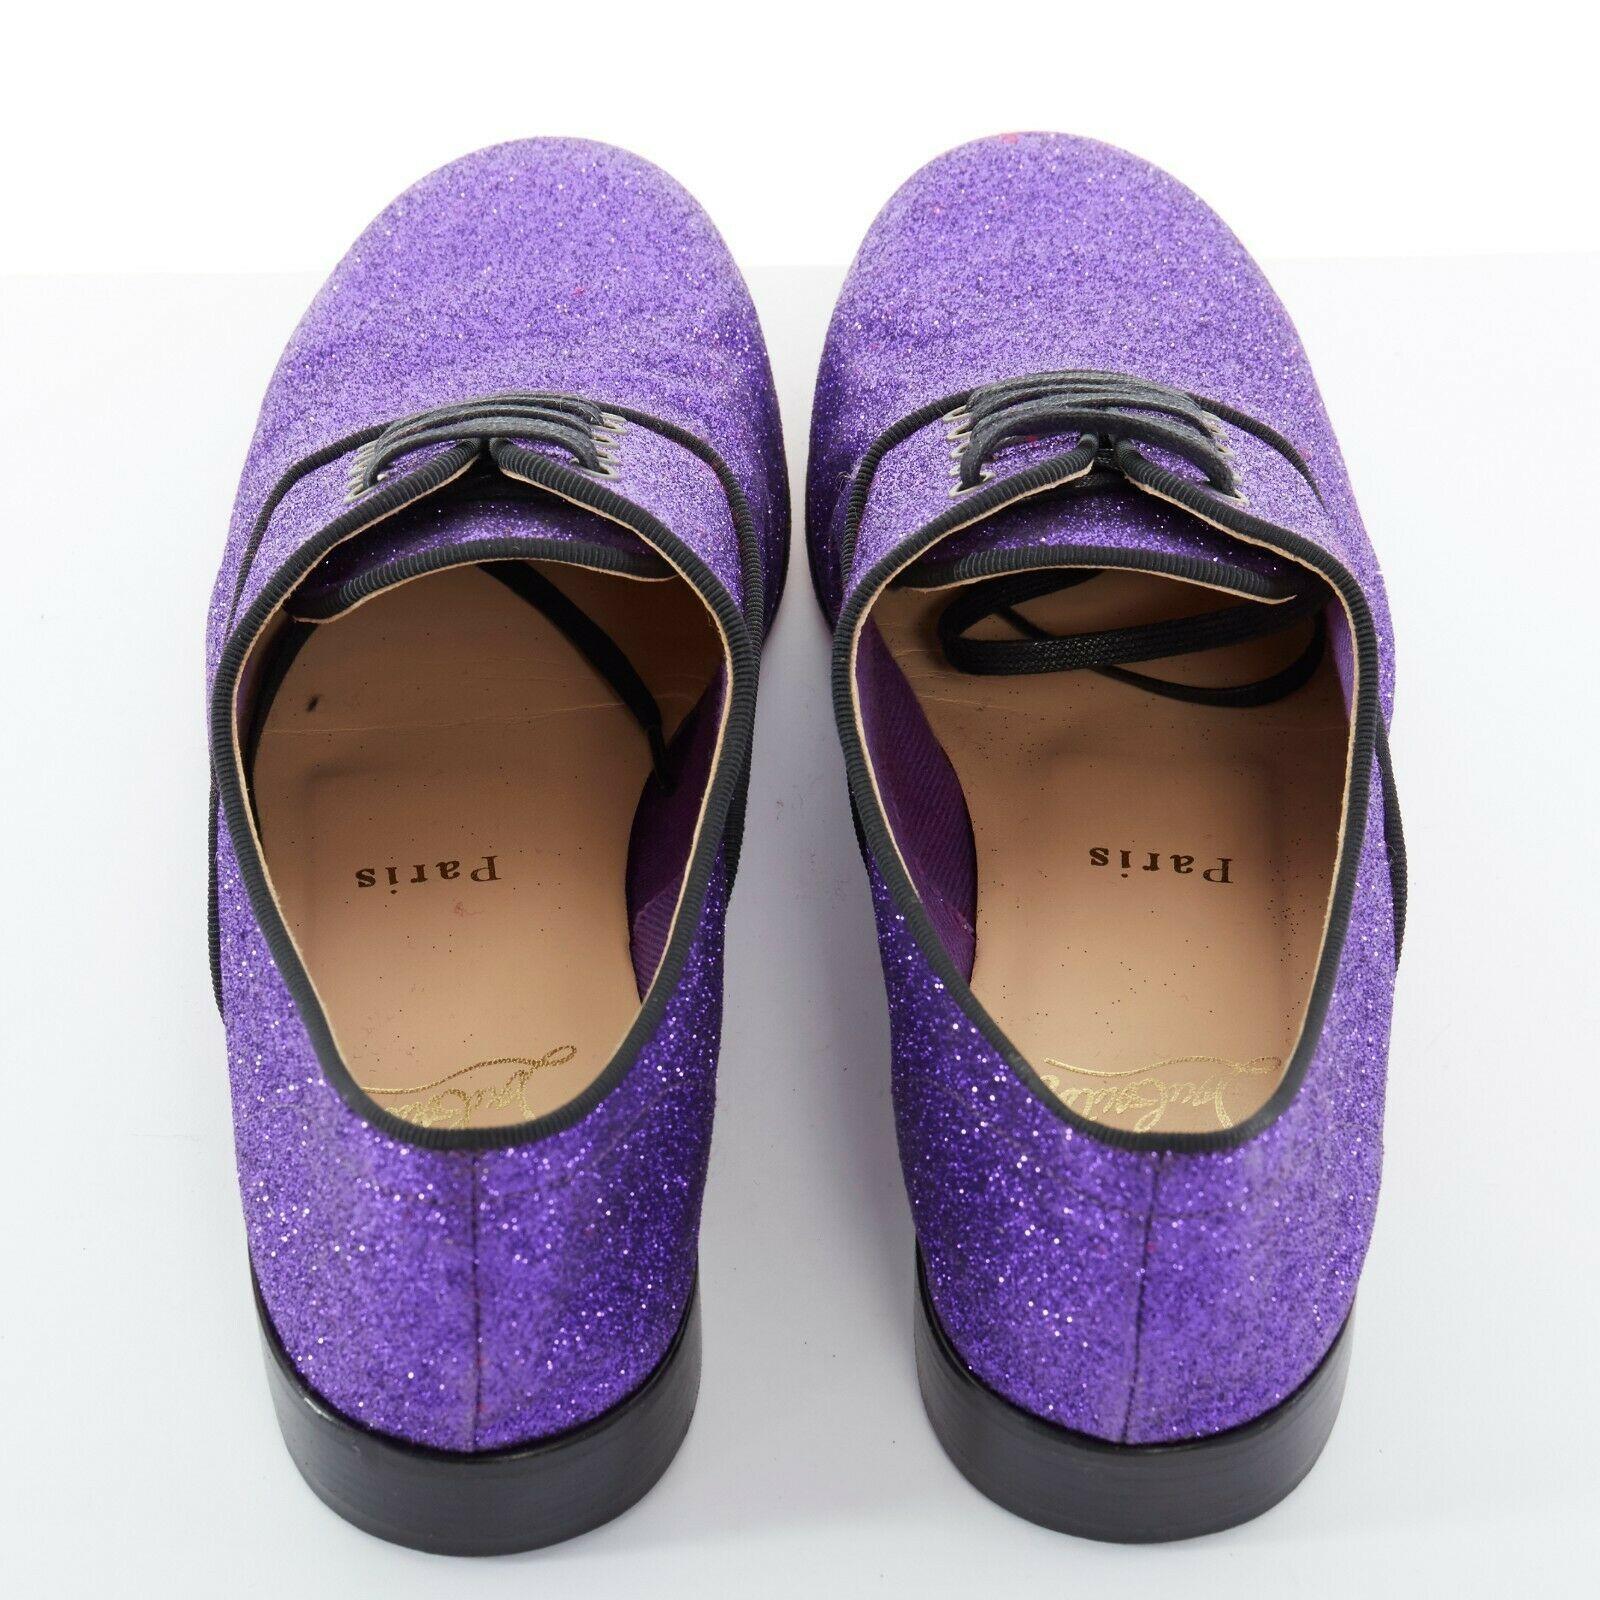 Women's CHRISTIAN LOUBOUTIN Fred Flat purple glitter leather lace derby flat shoe EU37.5